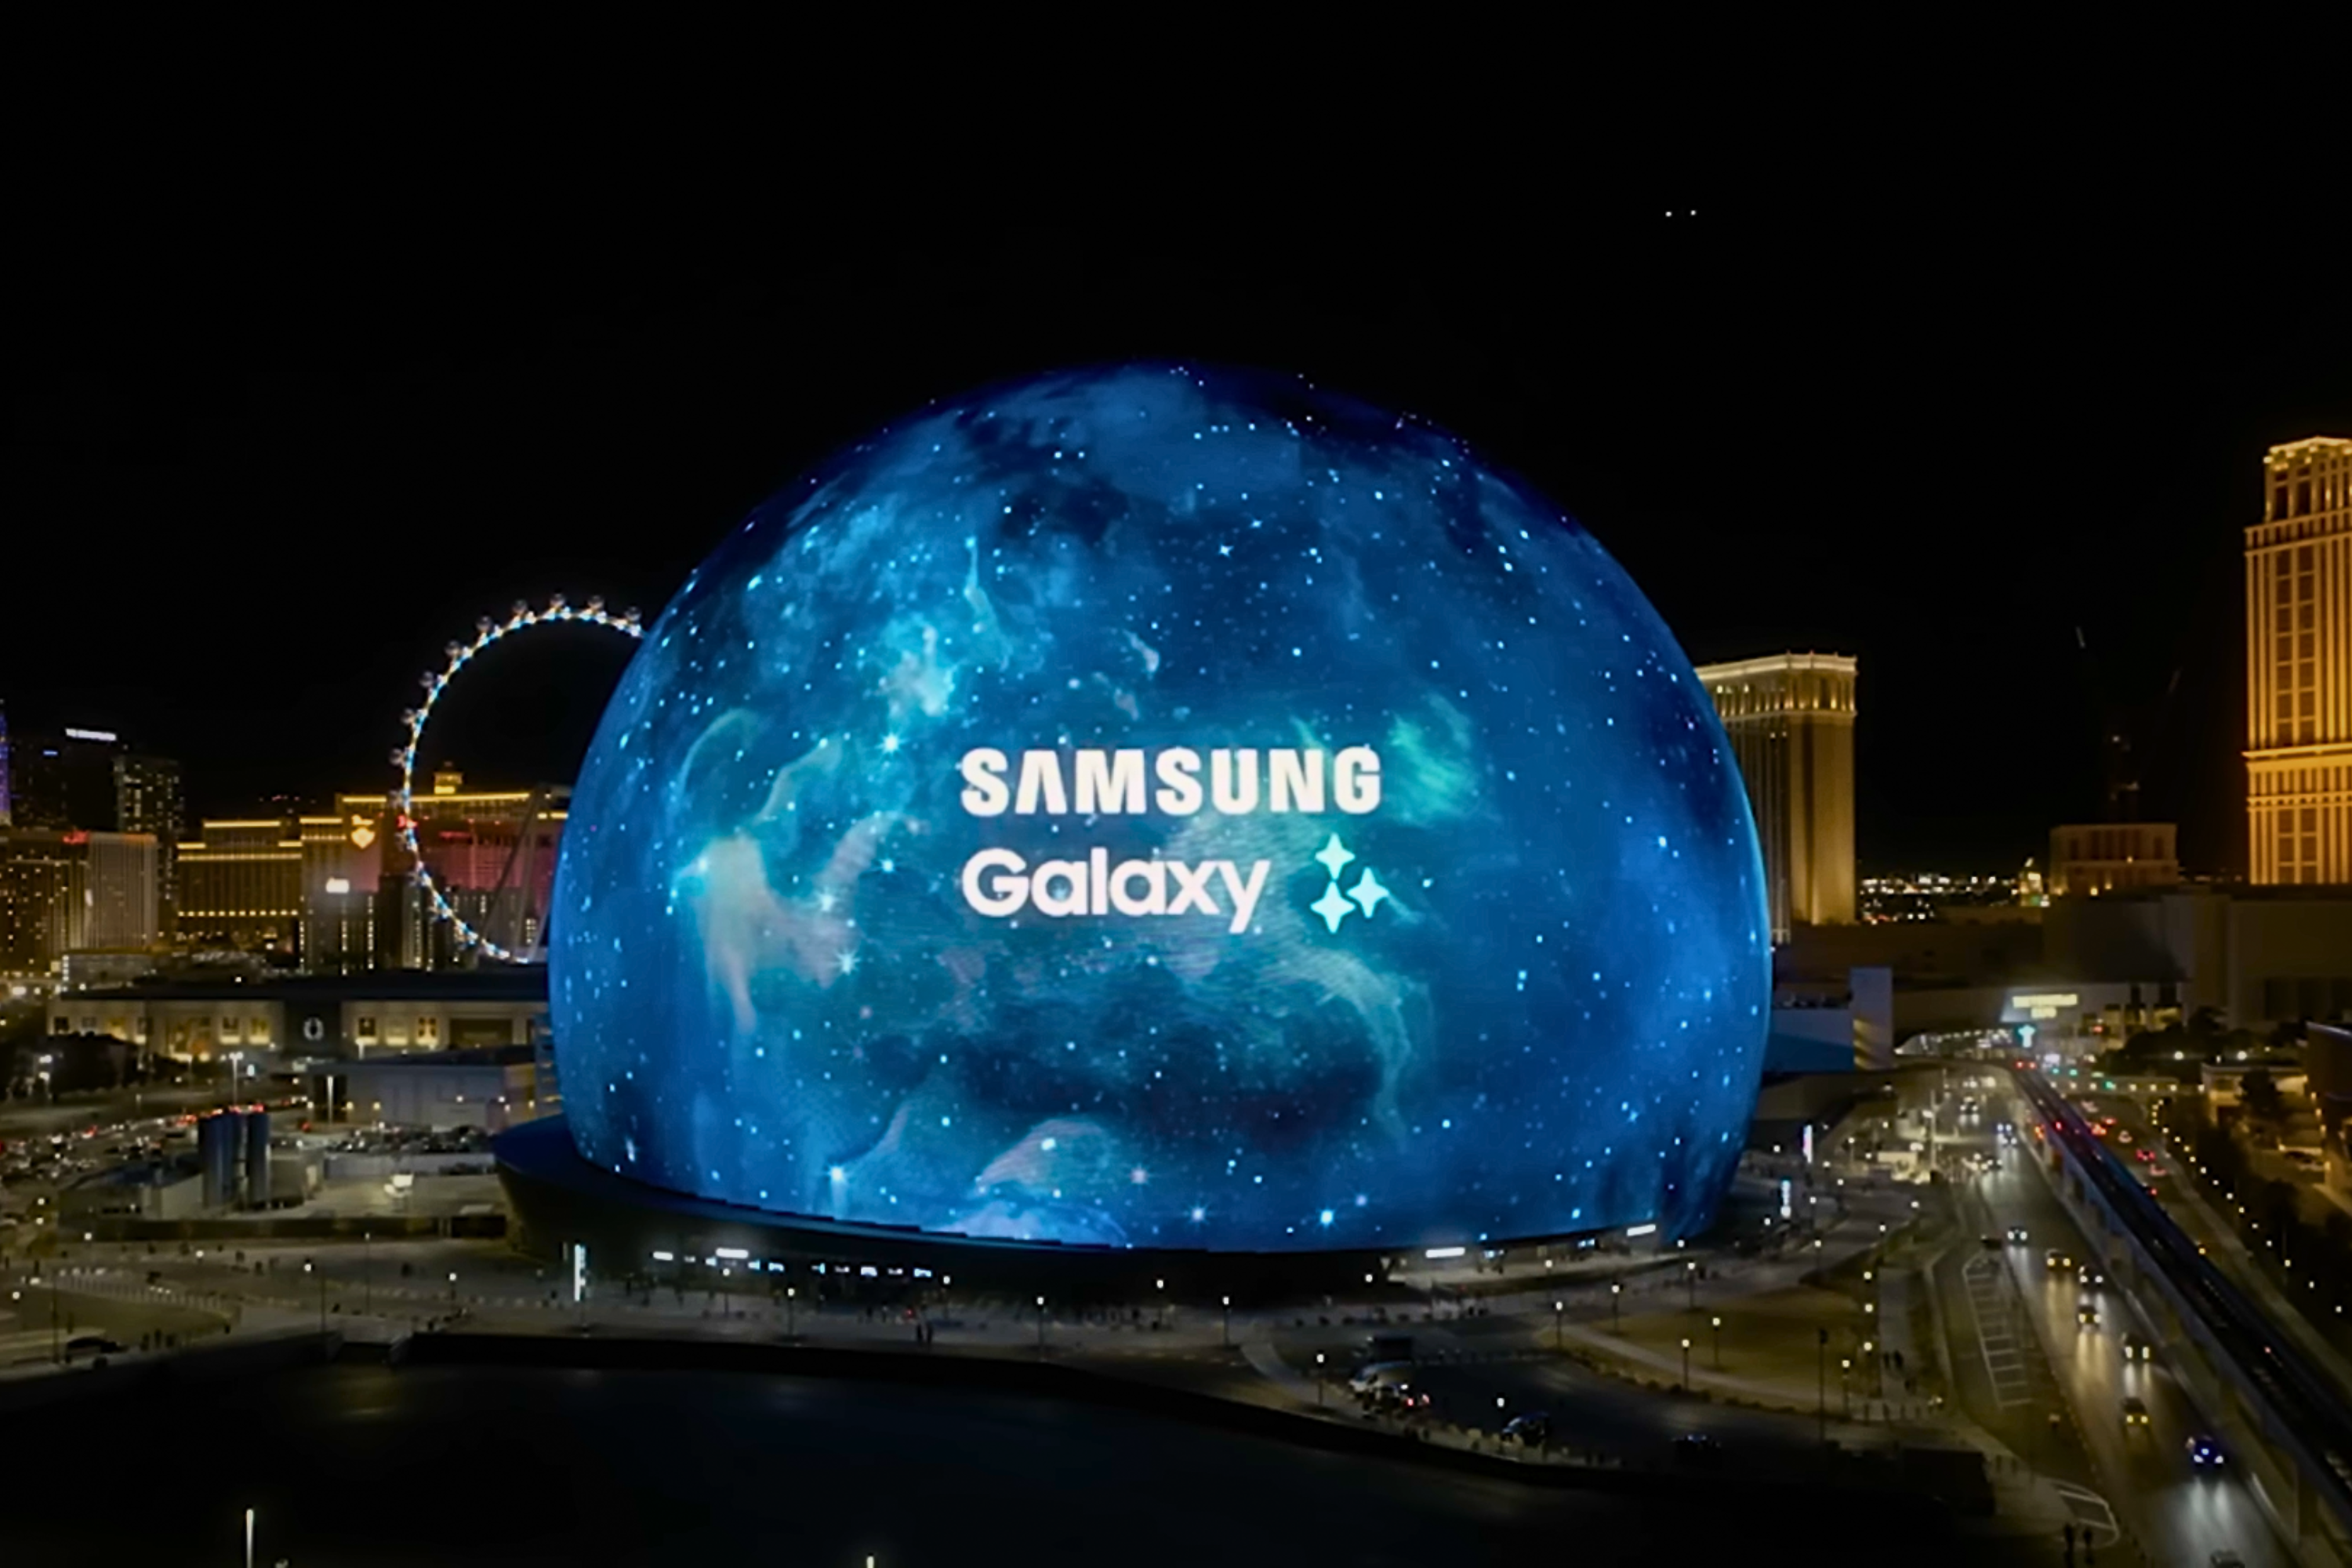 Samsung Galaxy Sphere in Las Vegas during CES 